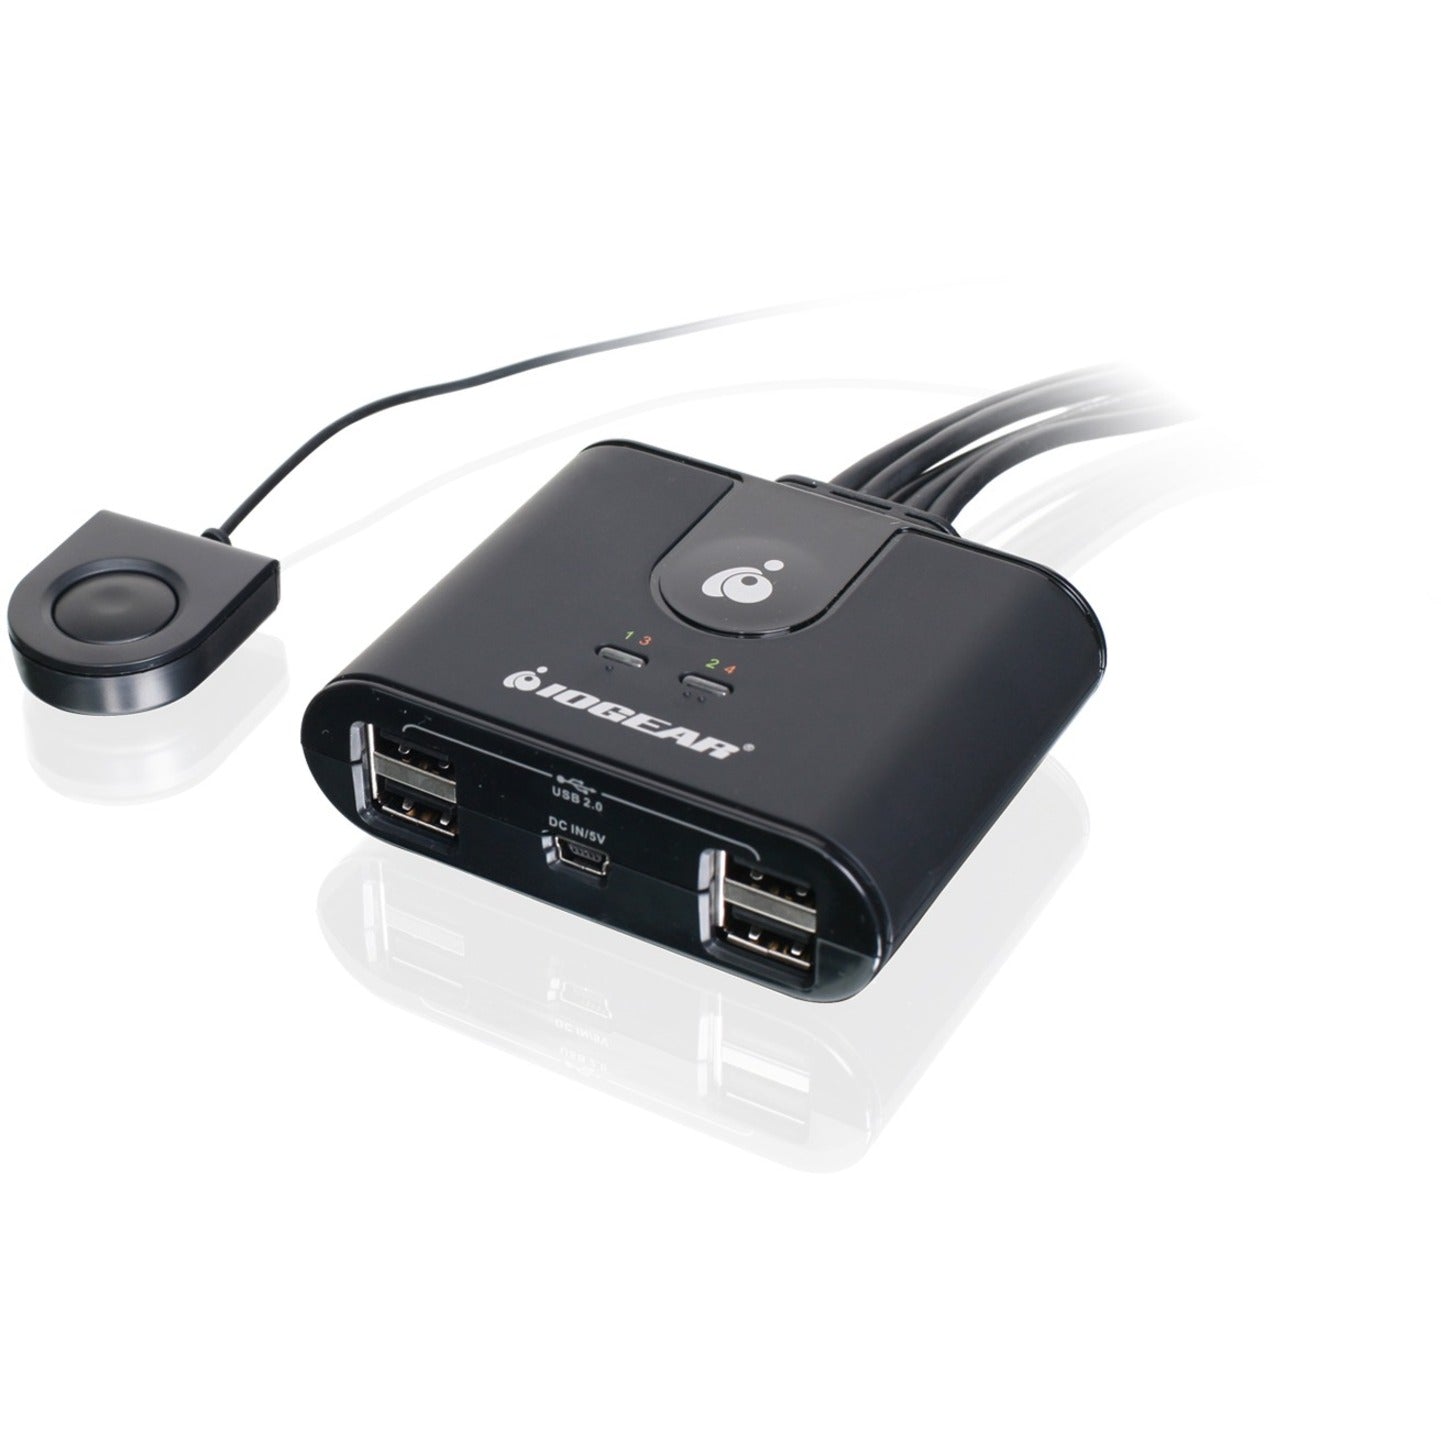 IOGEAR GUS404 4x4 USB 2.0 Peripheral Sharing Switch, 4 USB Ports, PC/Mac Compatible